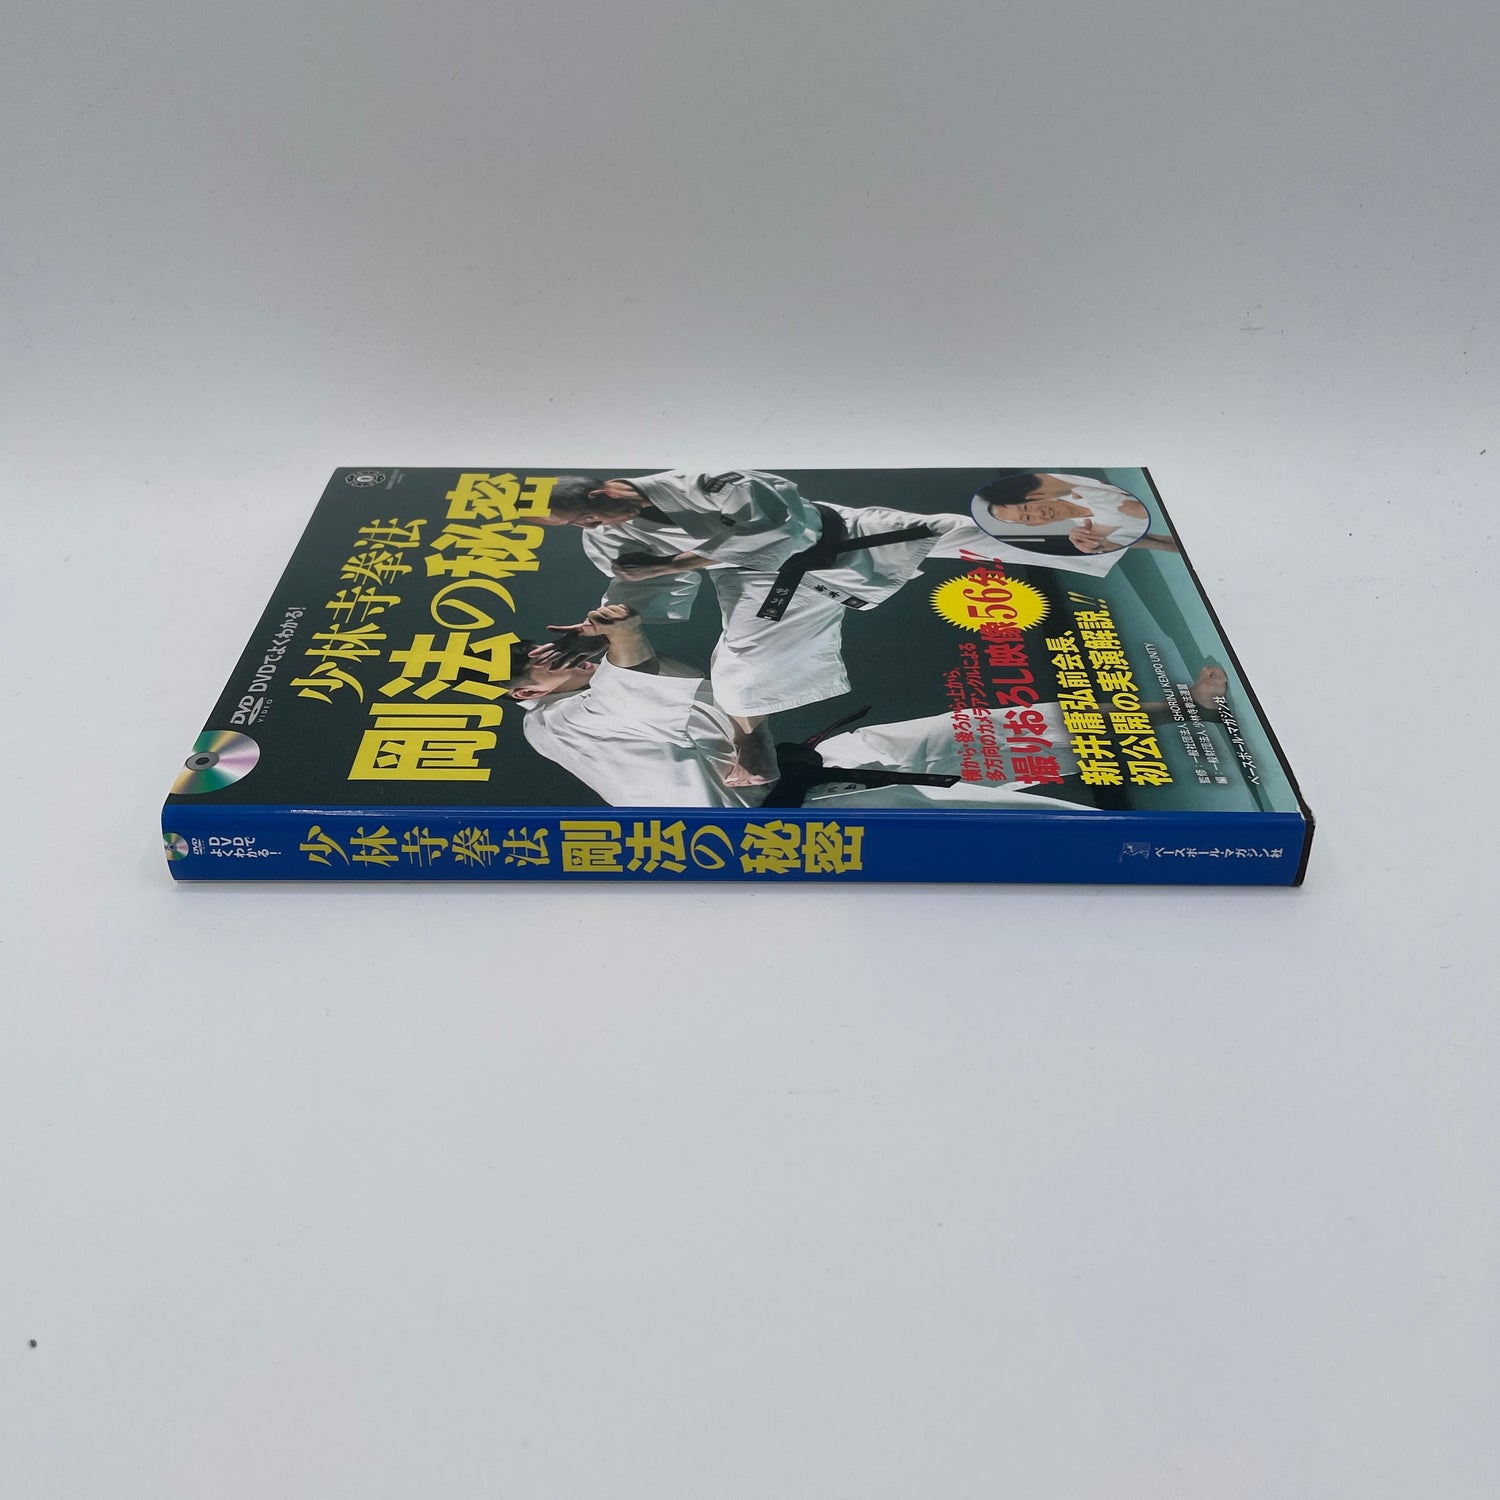 Secretos de Shorinji Kempo Goho Libro y DVD